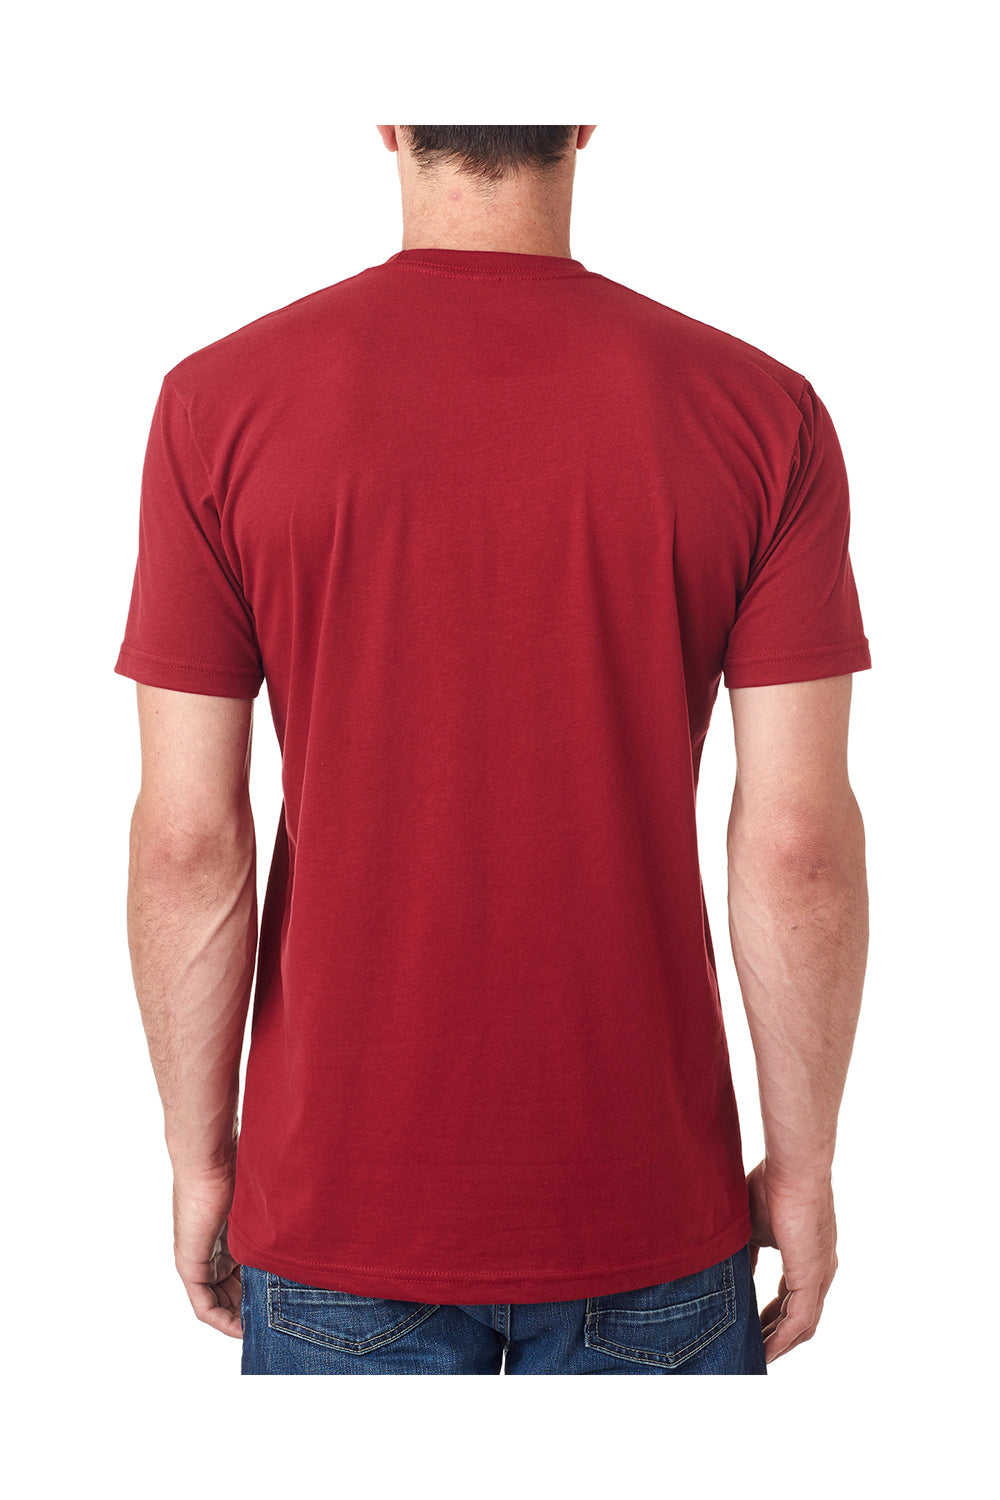 Next Level 6410 Mens Sueded Jersey Short Sleeve Crewneck T-Shirt Cardinal Red Back